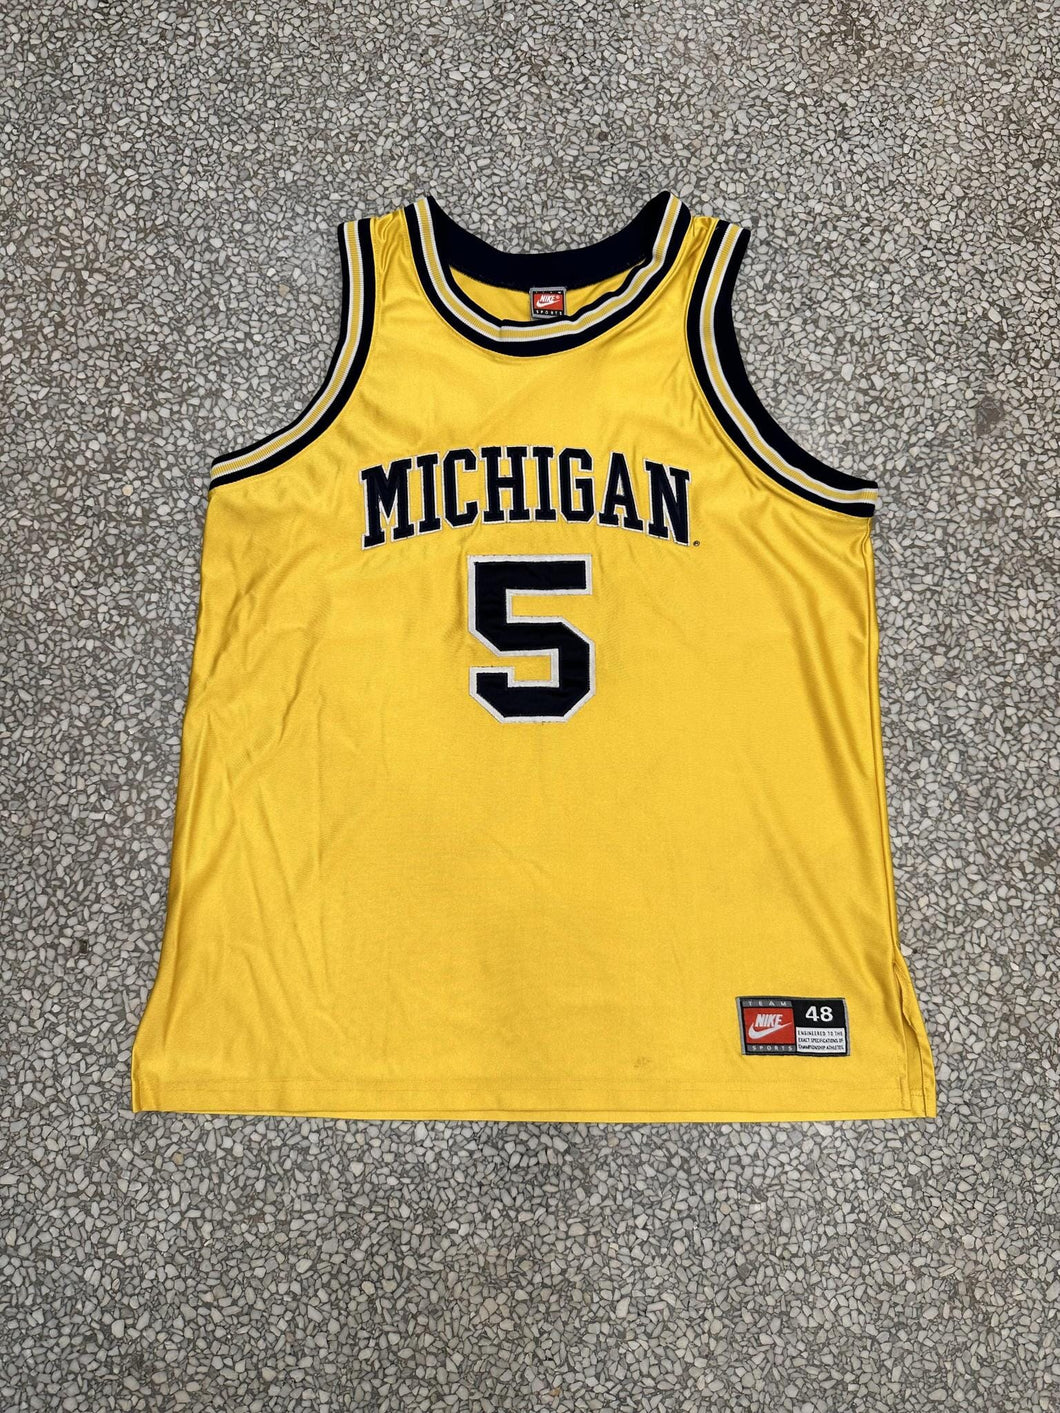 Michigan Wolverines Jalen Rose #5 Vintage 90s Nike Basketball Jersey Yellow ABC Vintage 